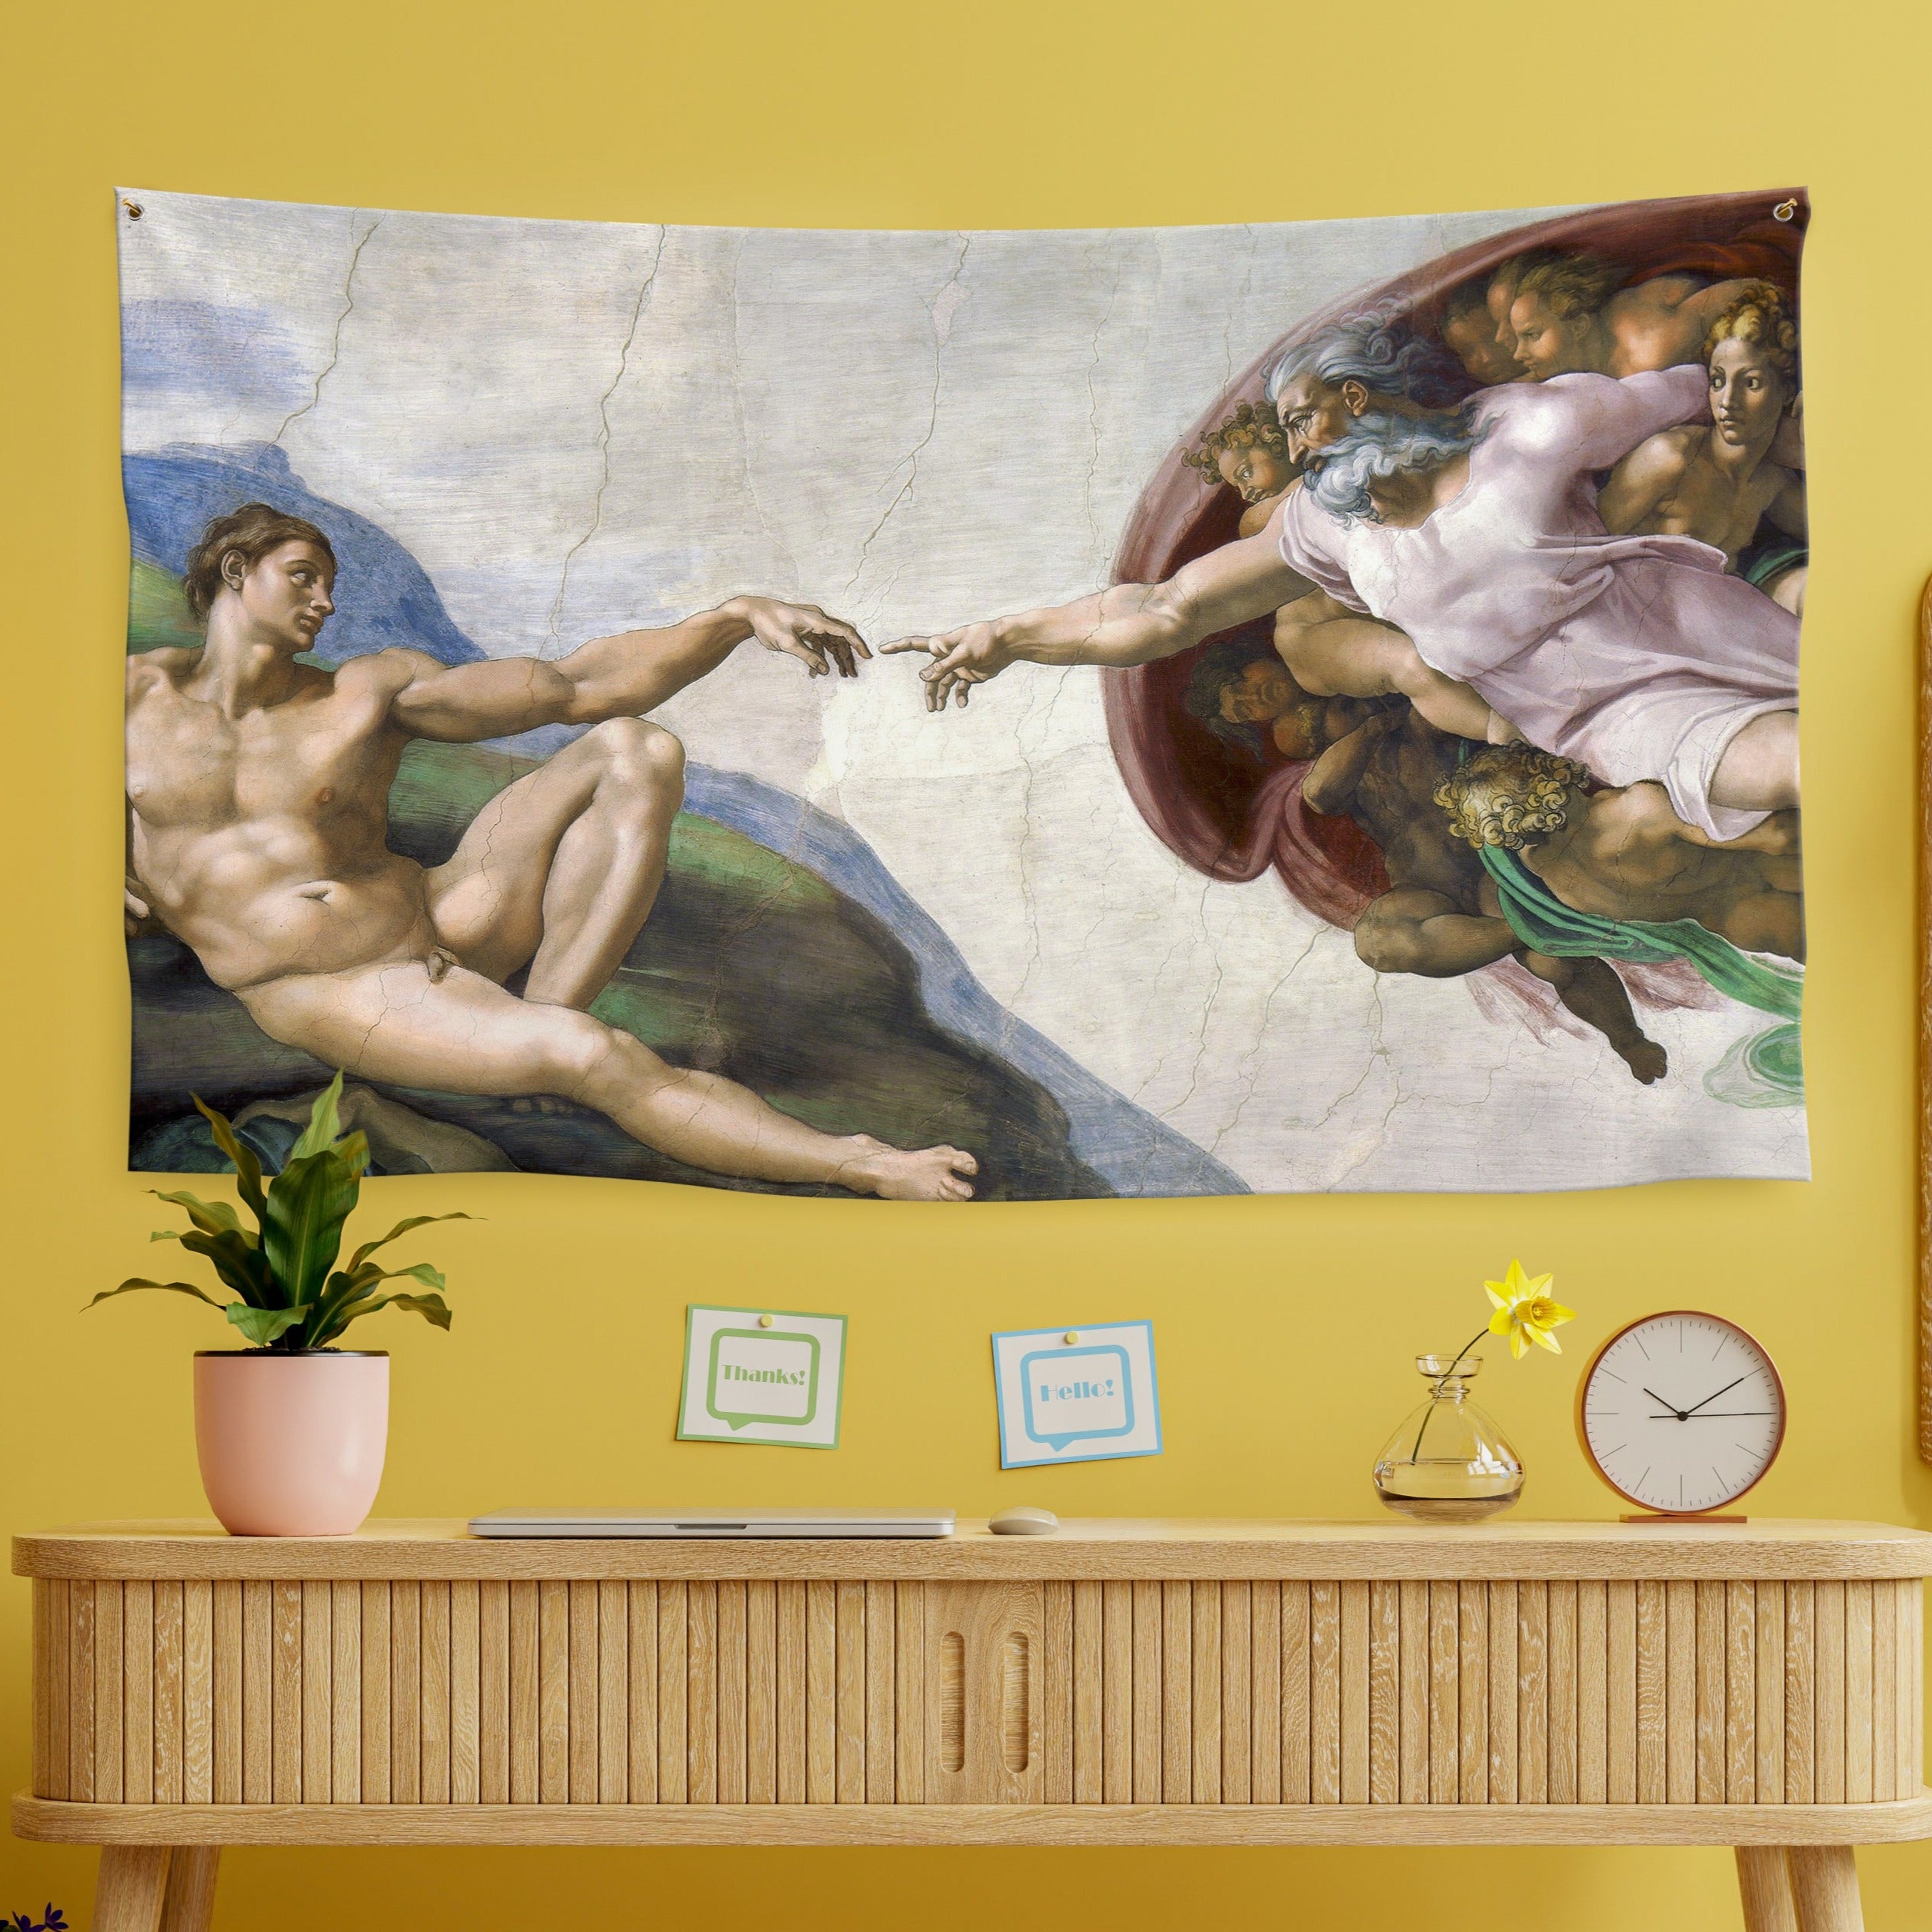 Sienos dekoracija gobelenas Michelangelo "The Creation of Adam"